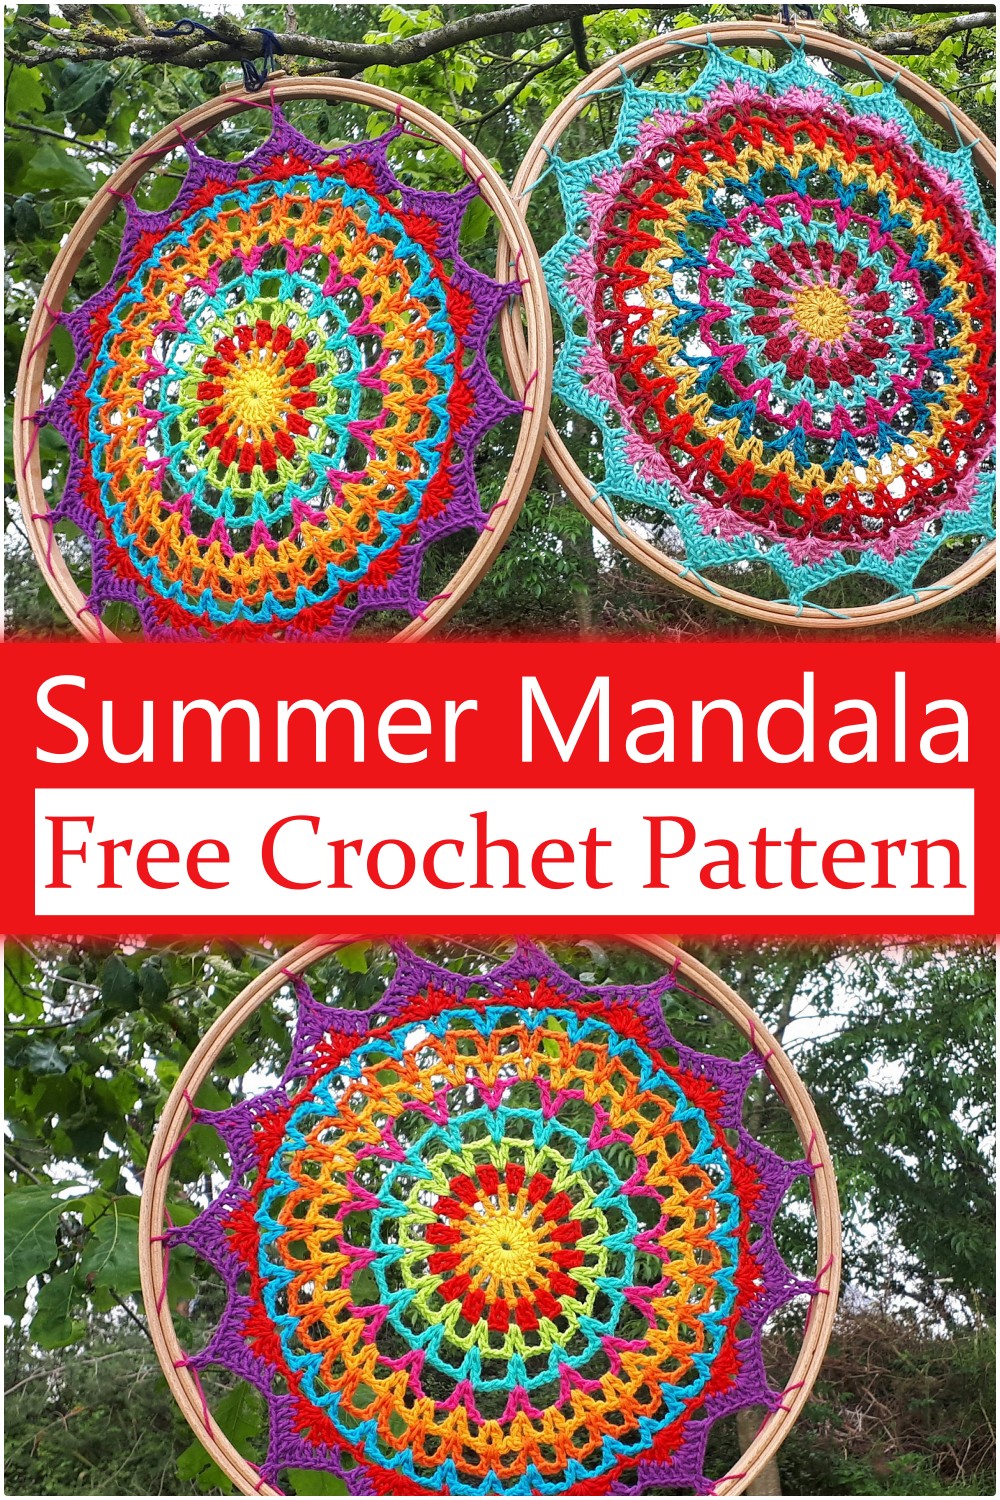 Crochet Mandala Wall Hanging Pattern For Summer